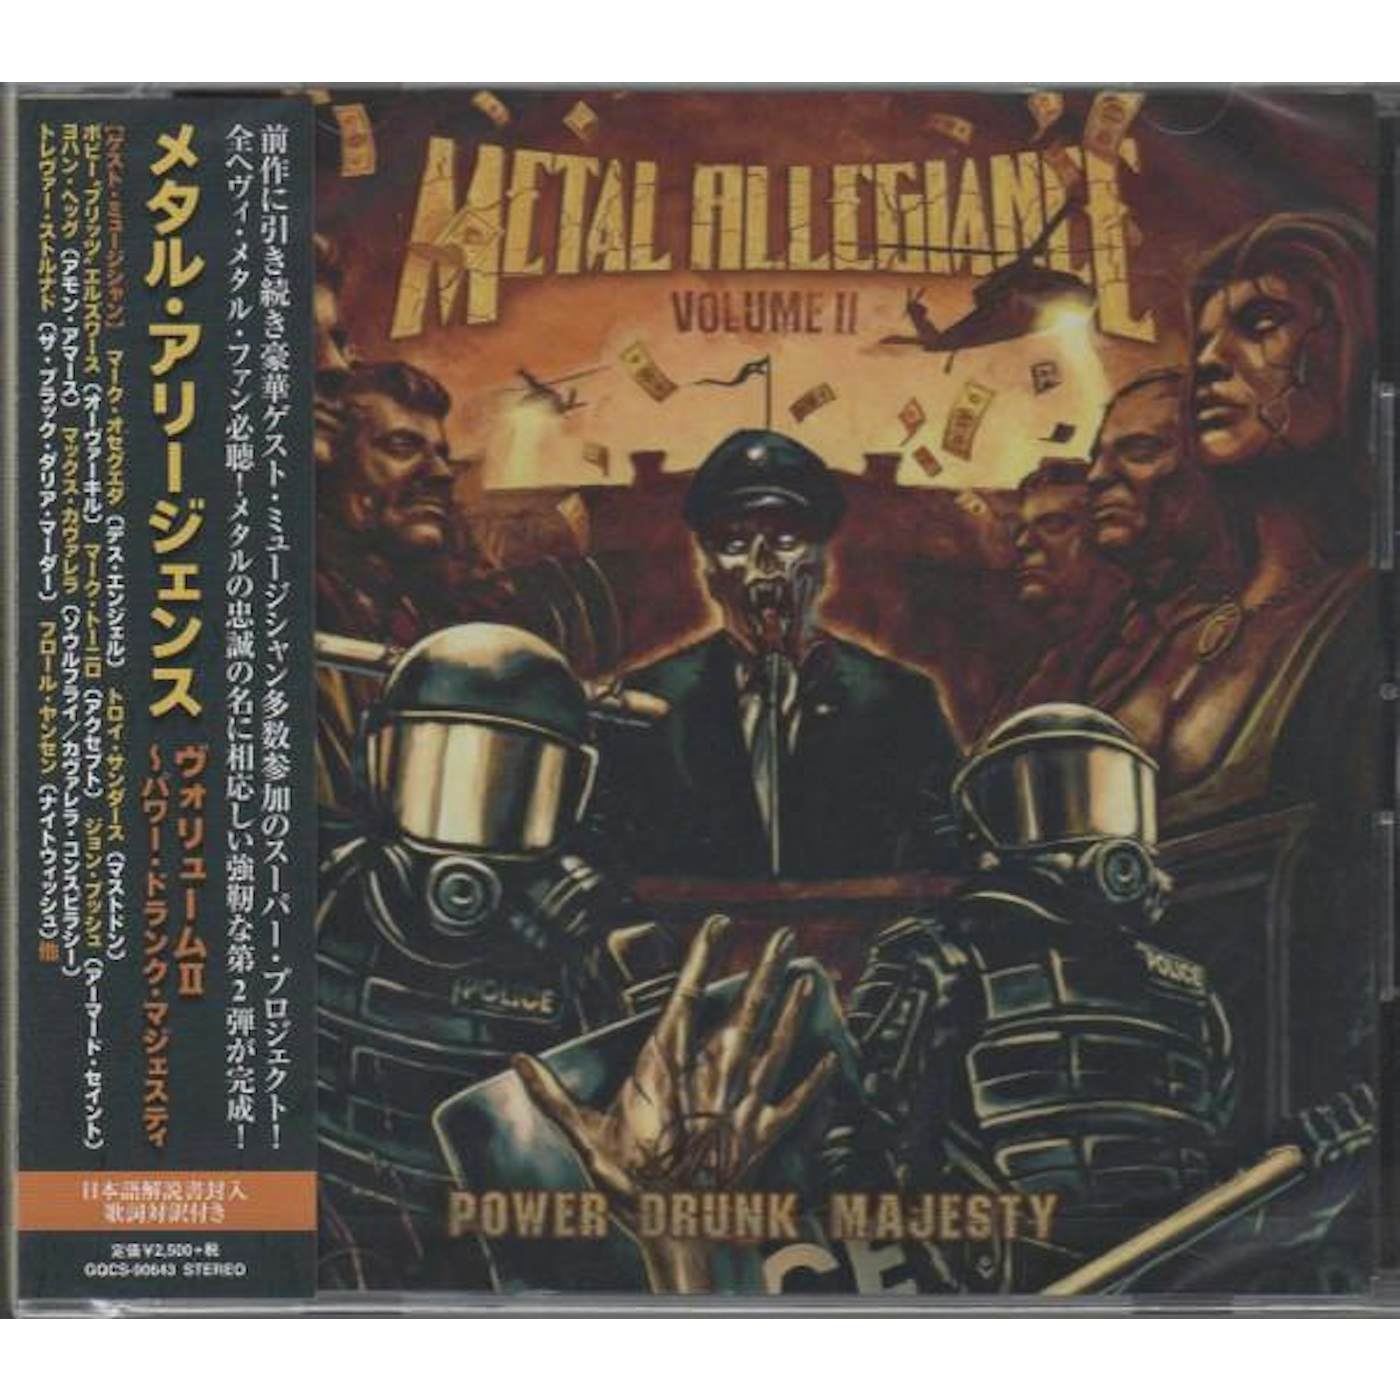 Metal Allegiance VOL.2 POWER DRUG MAJESTY CD